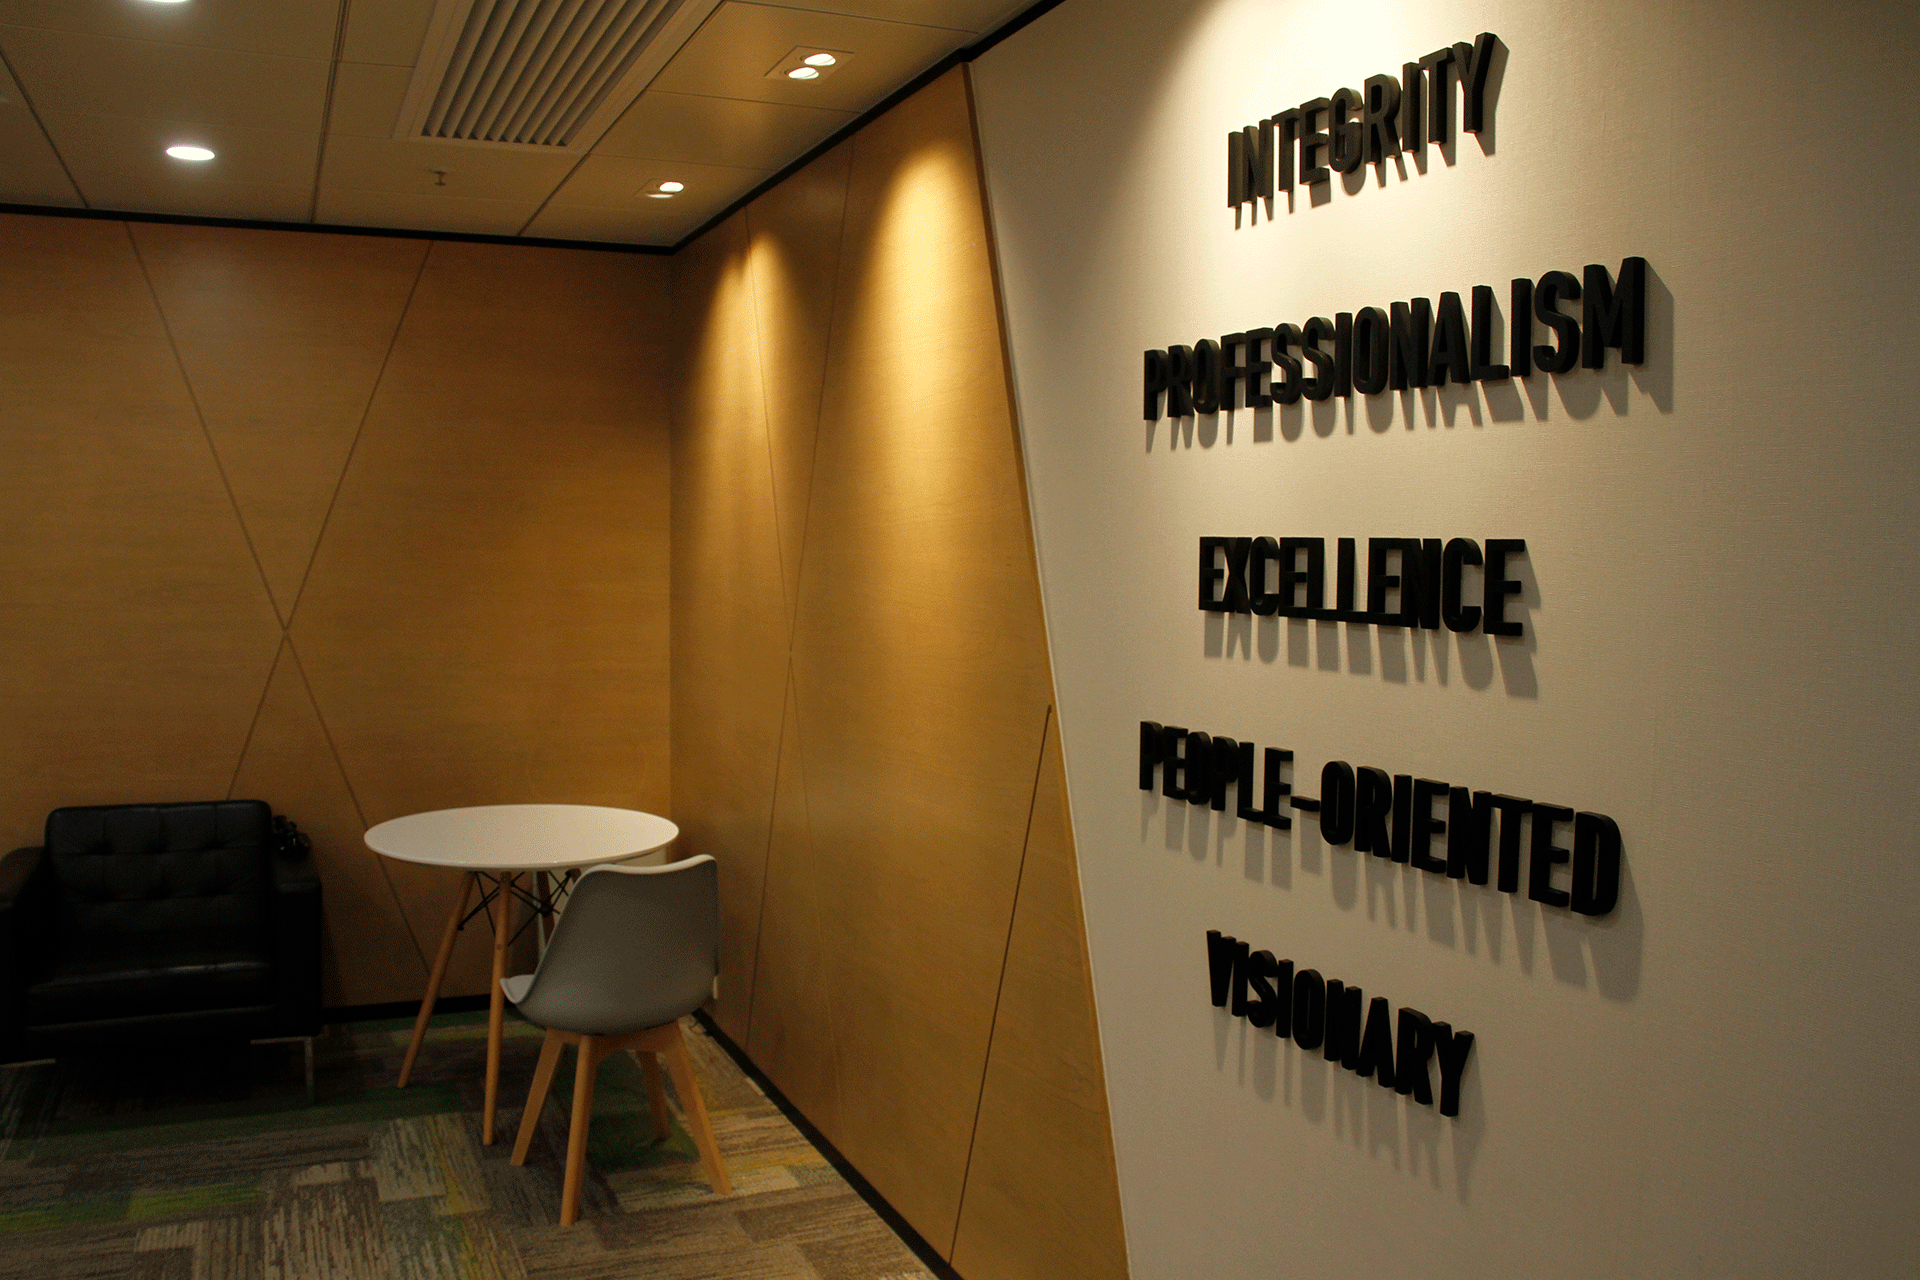 totalgroups environment hk Sime Darby Motors reception area interior design